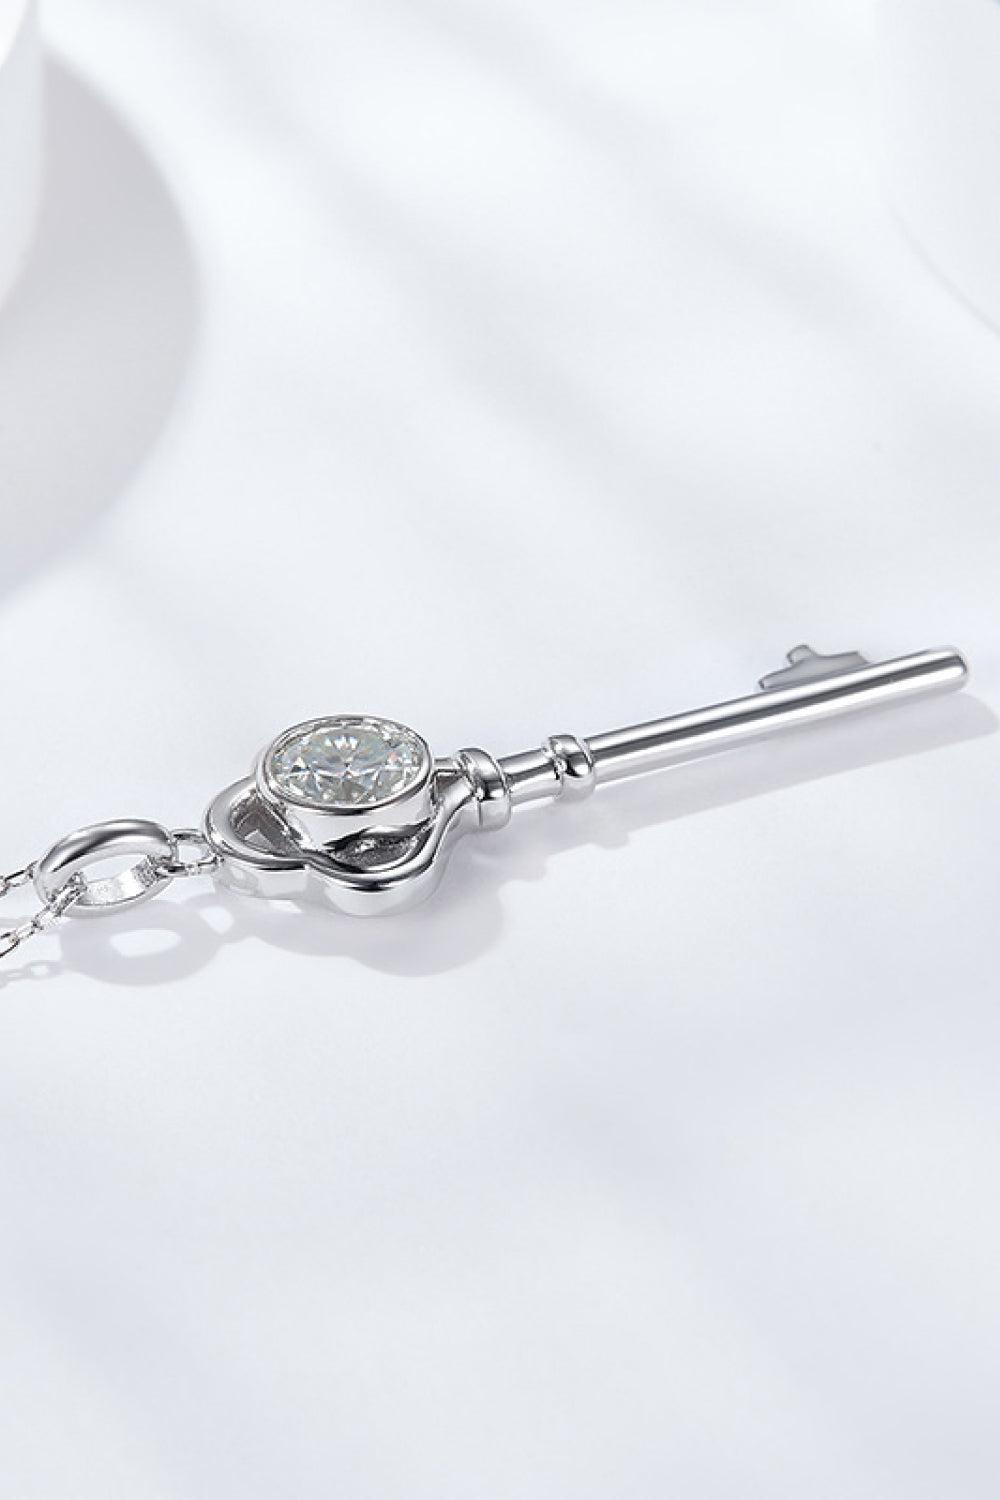 925 Sterling Silver 1 Carat Moissanite Key Pendant Necklace BLUE ZONE PLANET